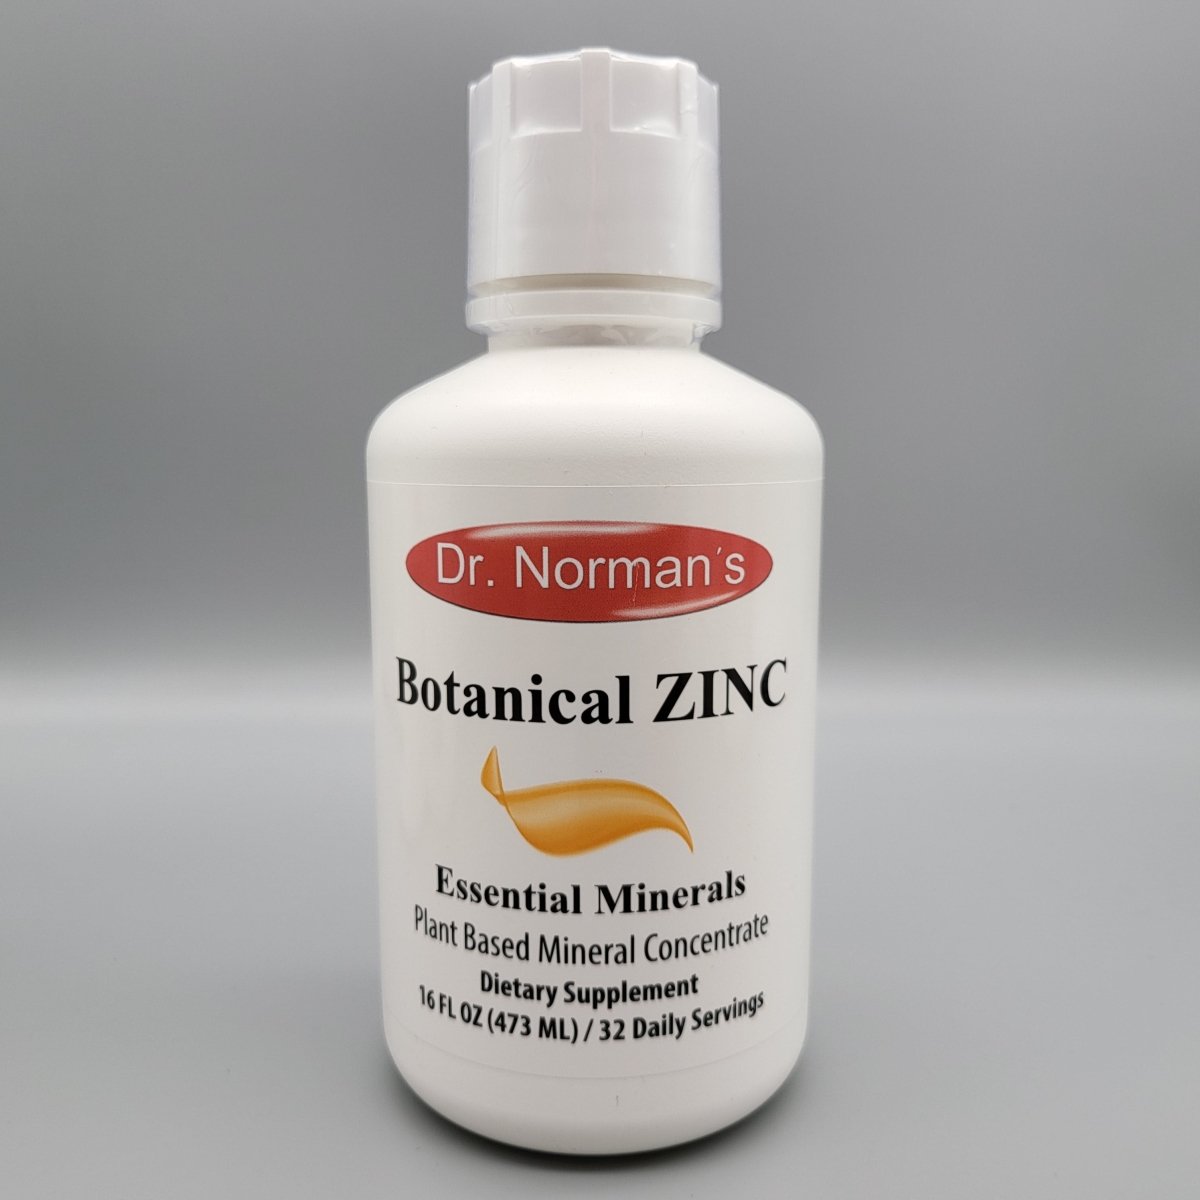 DR. NORMAN'S ESSENTIAL MINERALS - BOTANICAL ZINC (16 OZ)